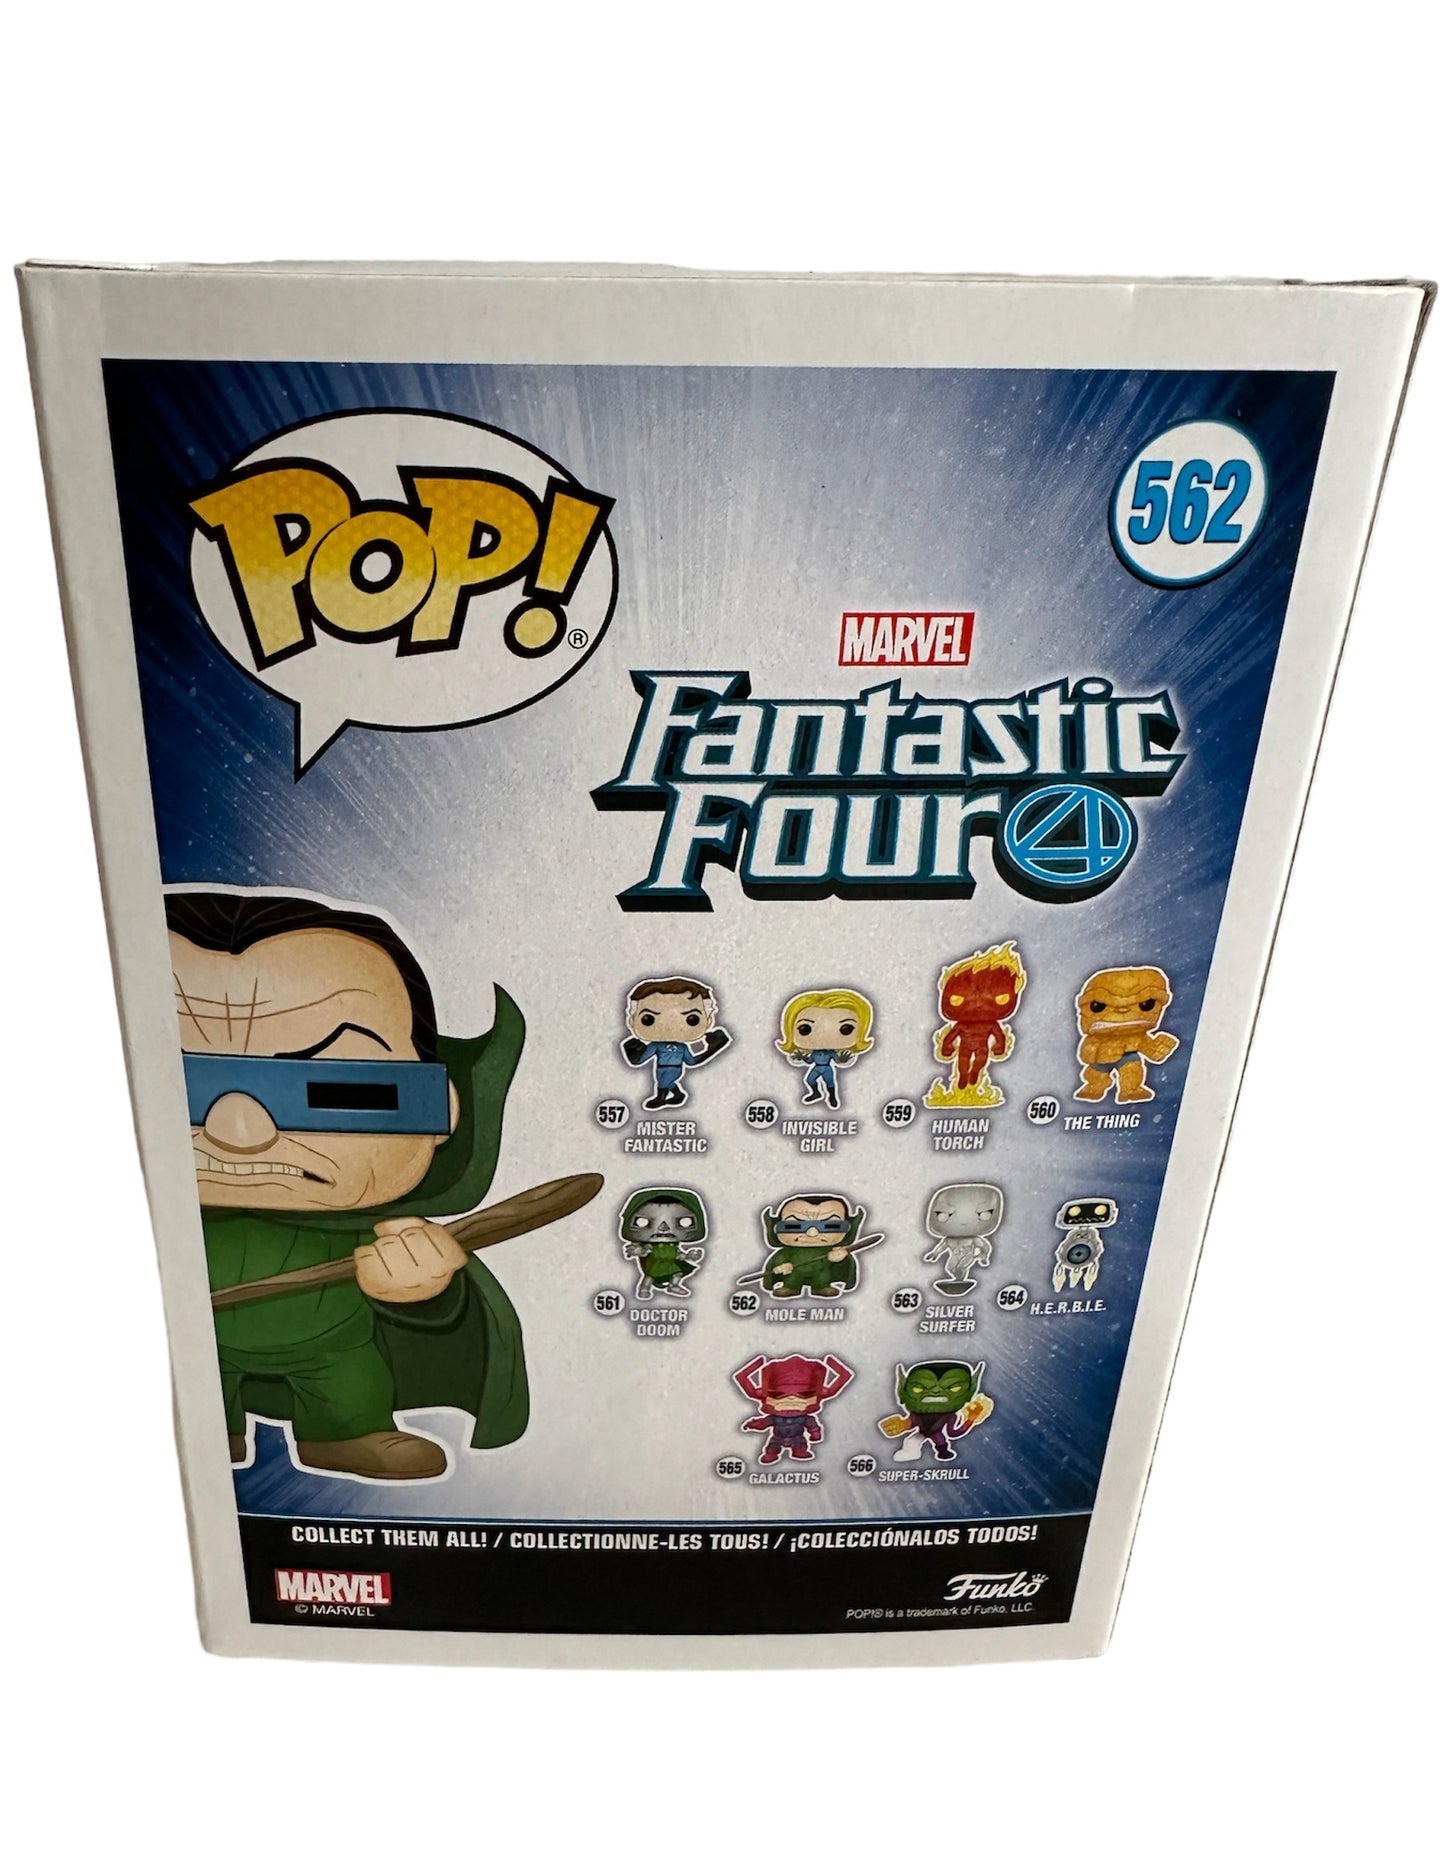 POP! 2019 Marvels The Fantastic Four Pop Vinyl Figure - Mole Man Bobble-Head No. 562 - Brand New Shop Stock Room Find